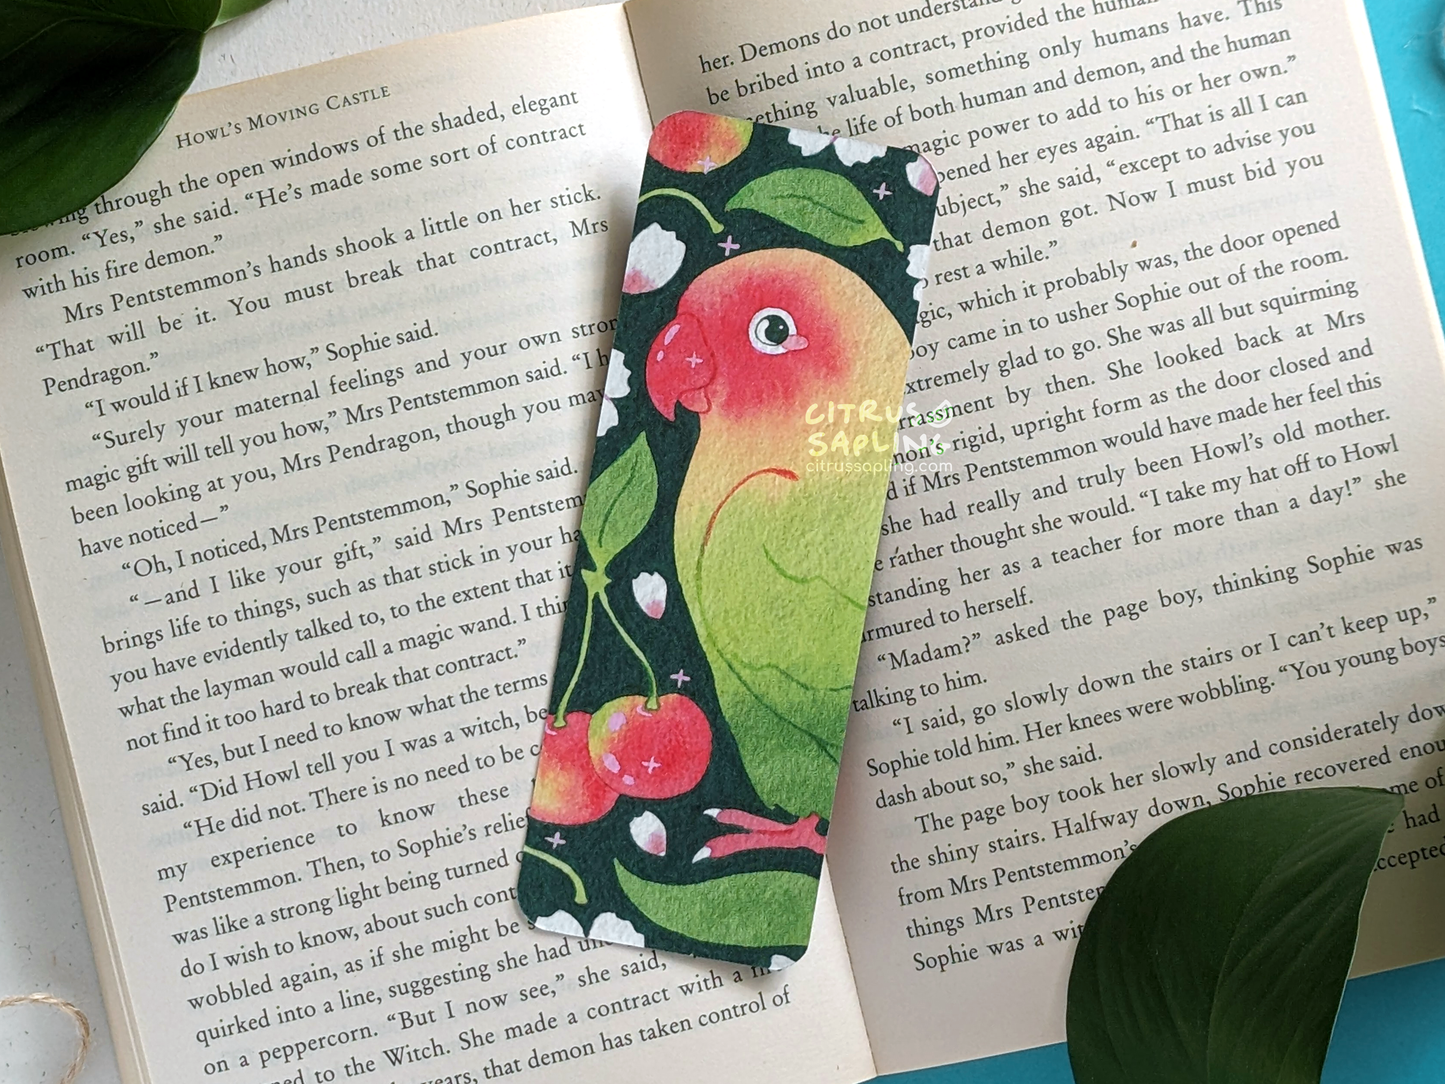 Lovebird Bookmark